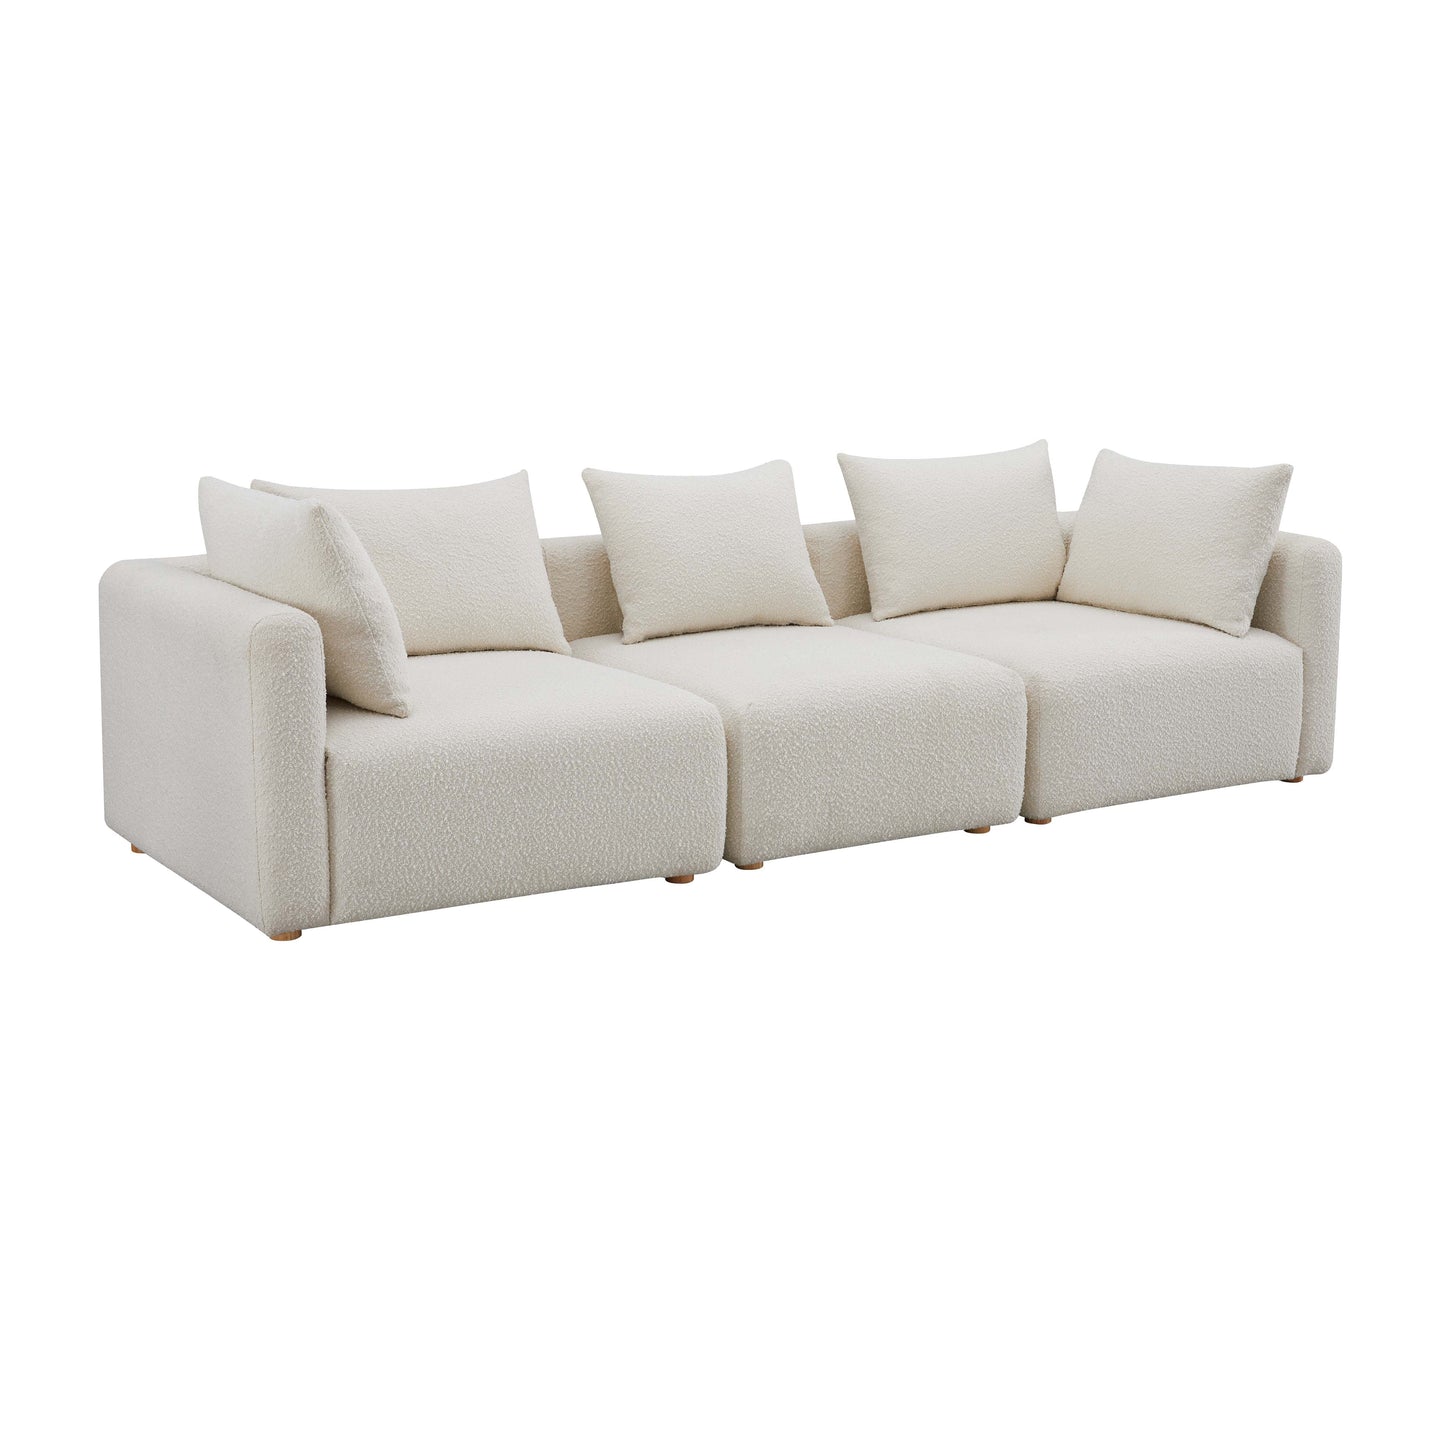 Tov Furniture Hangover Cream Boucle Sofa